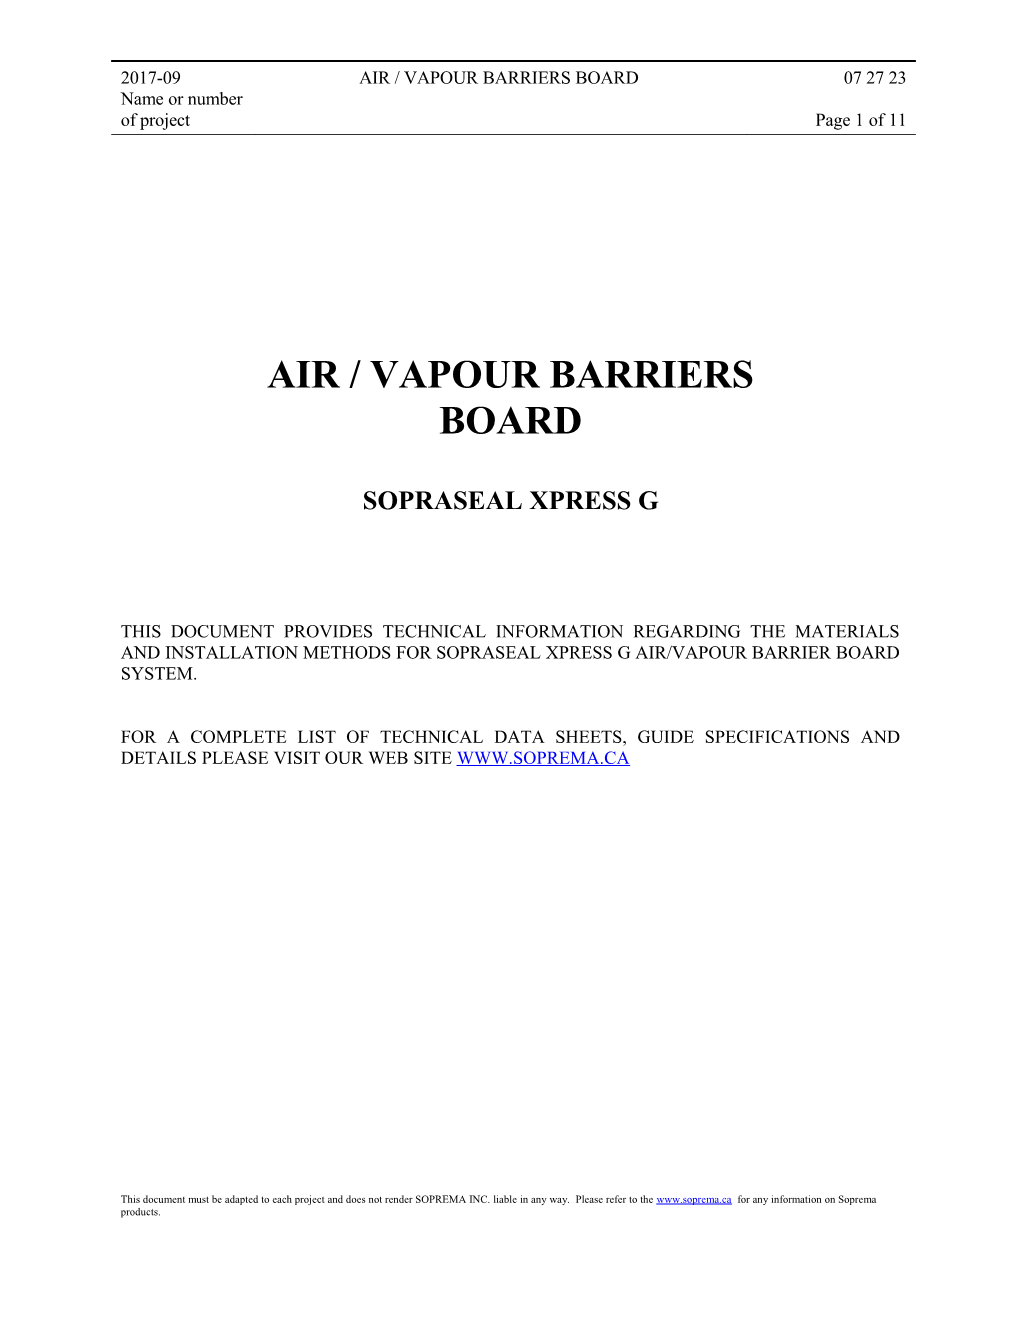 Air/Vapour Barriers